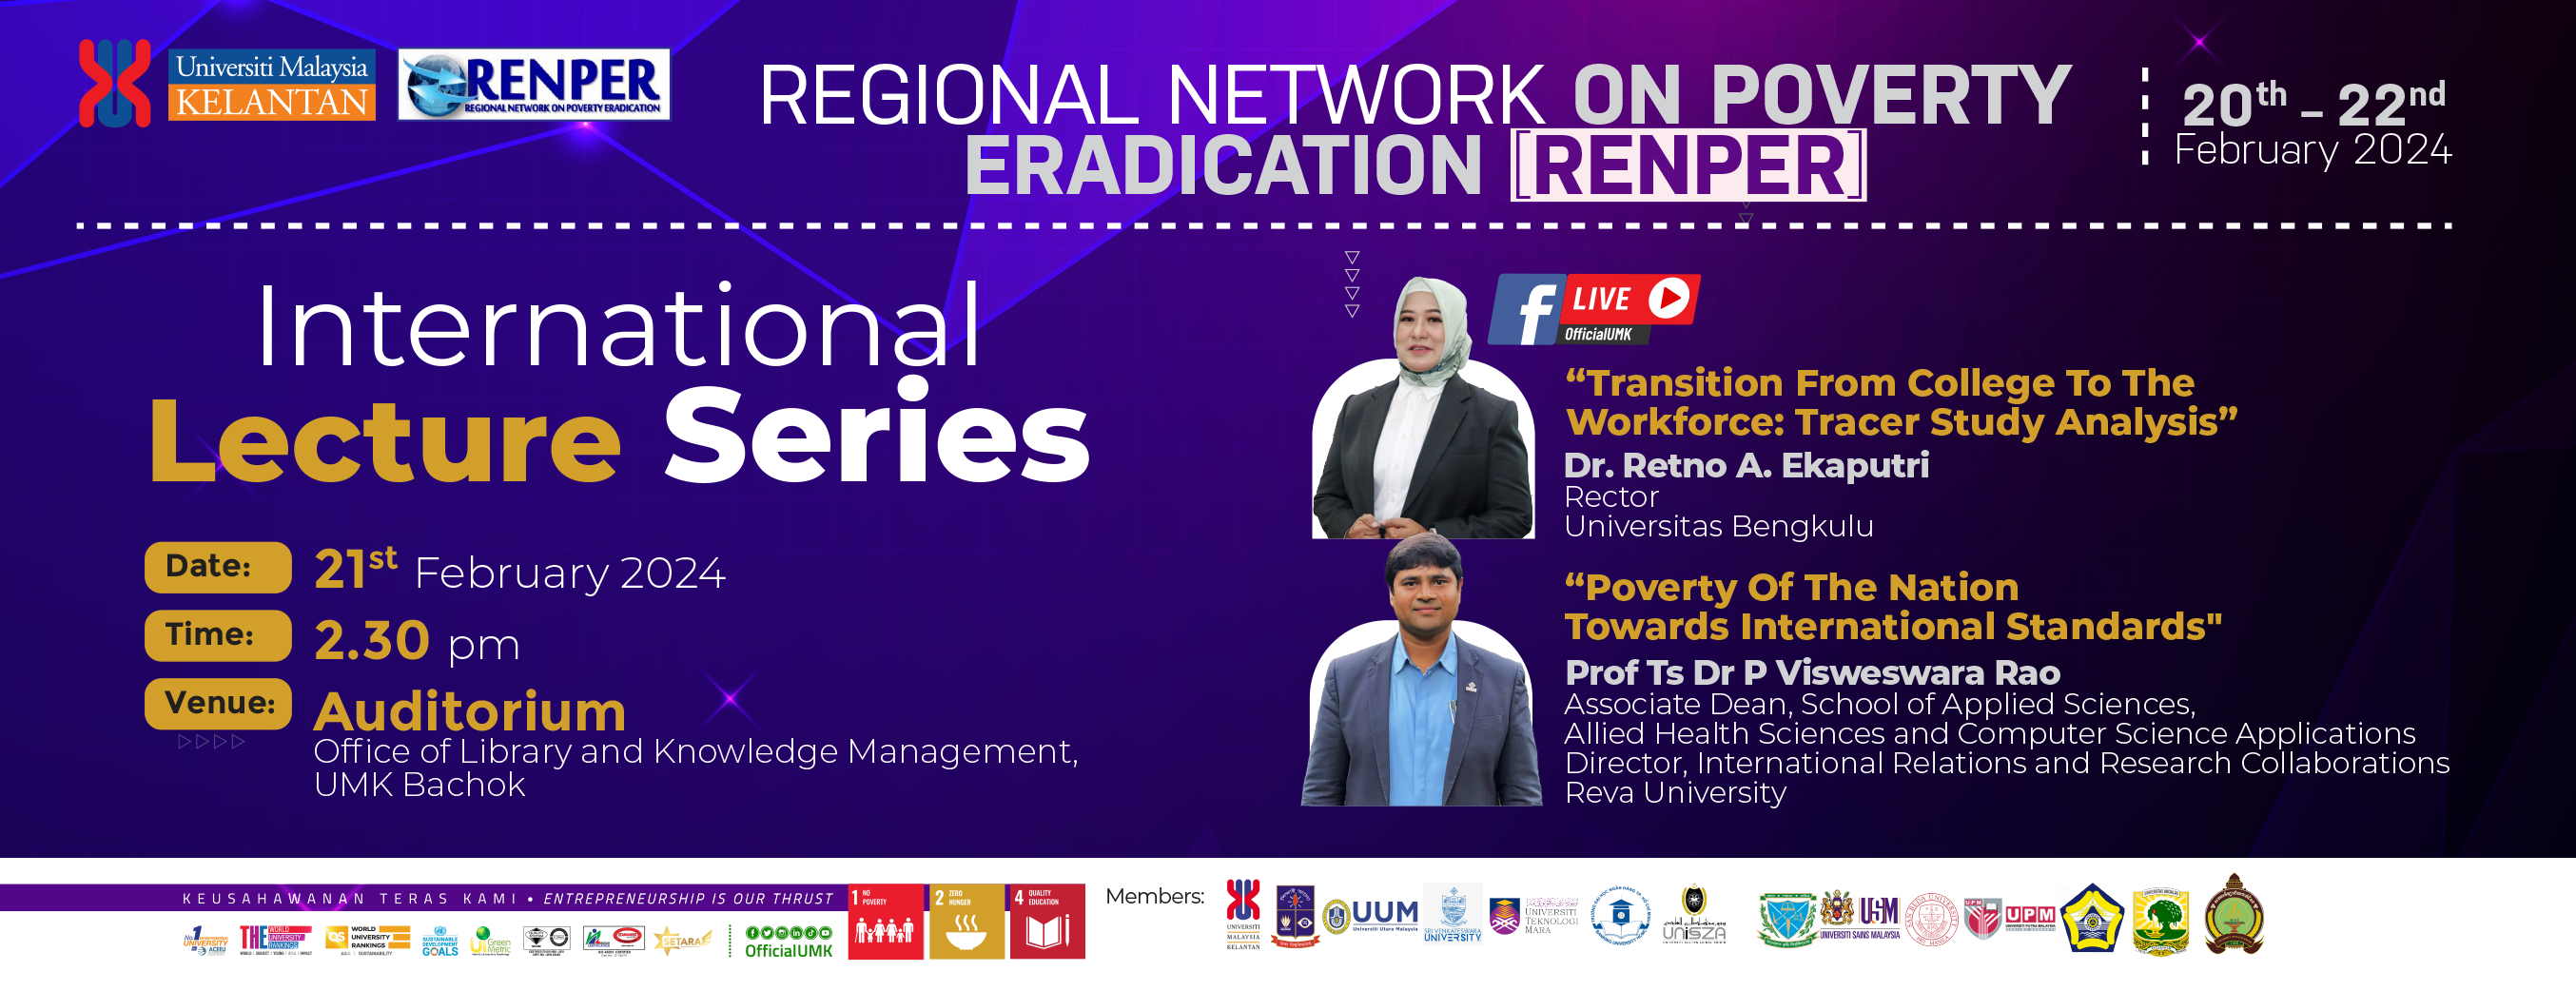 International Lecture Series REGIONAL NETWORK ON POVERTY ERADICATION (RENPER)